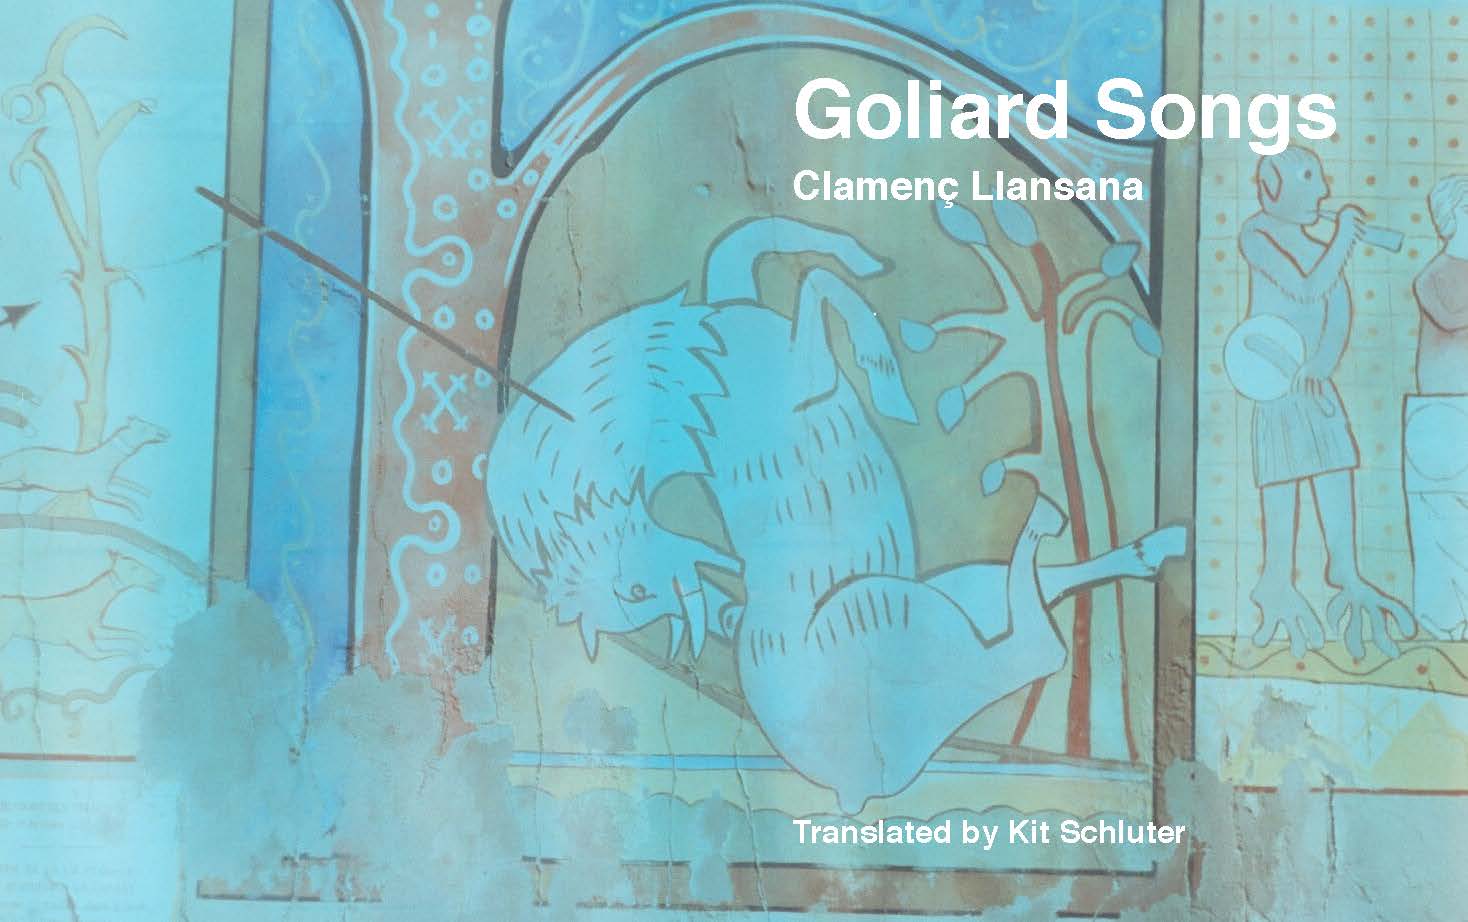 The Occitan Goliard Songs of Clamanc Llansana followed by a French prose poem of Marcel de l'Aveugle